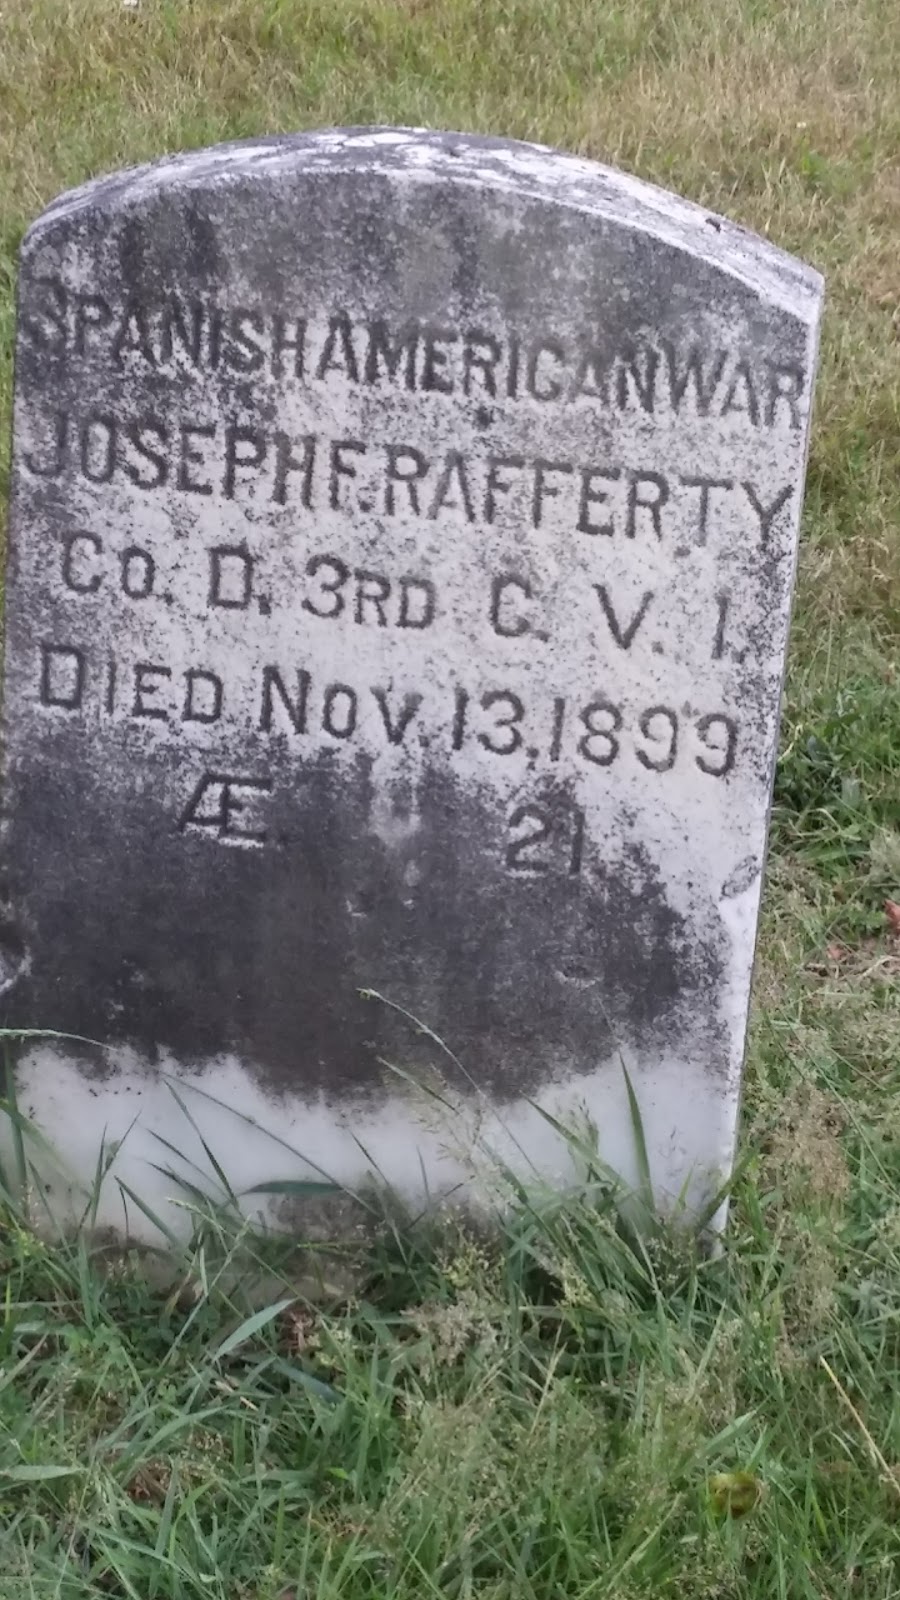 St Johns Catholic Cemetery | 25 Camp Ave, Darien, CT 06820 | Phone: (203) 742-1511